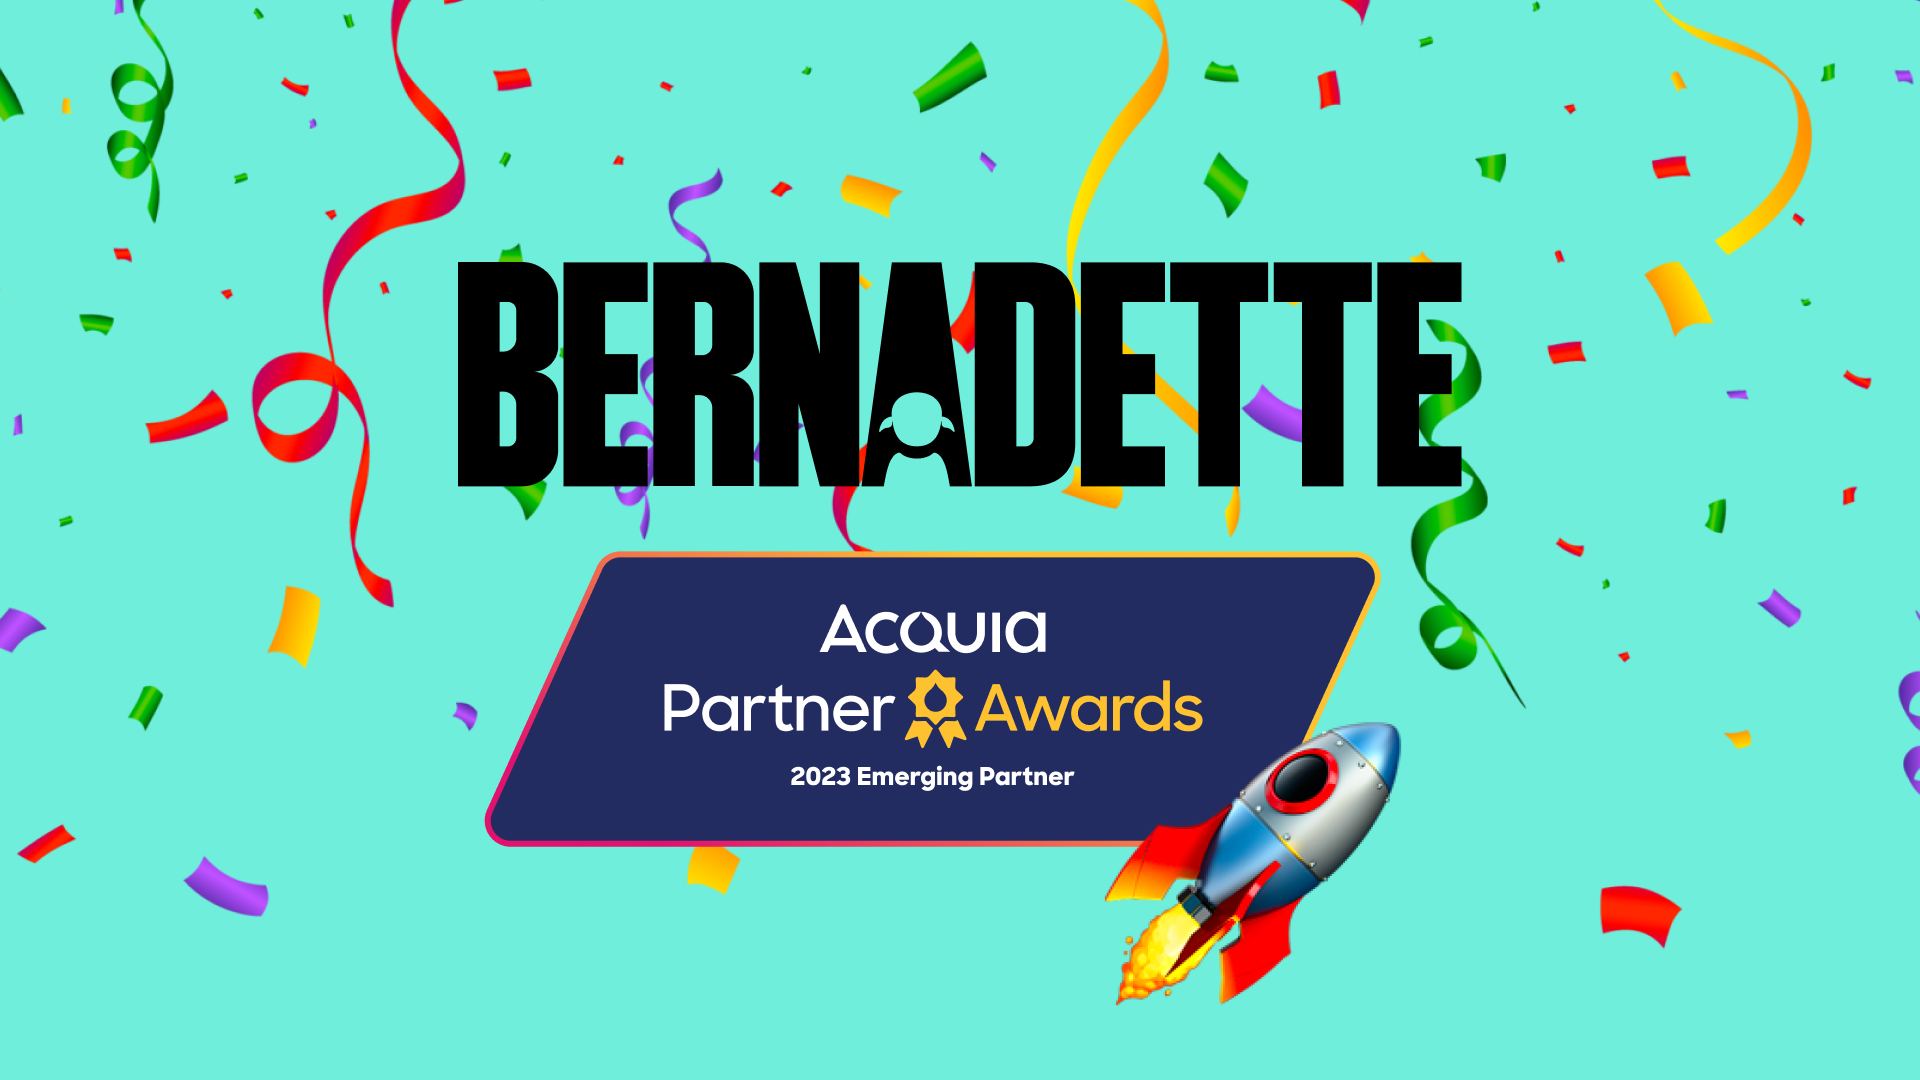 Bernadette has been crowned the winner of Acquia’s 2023 Emerging Partner Award